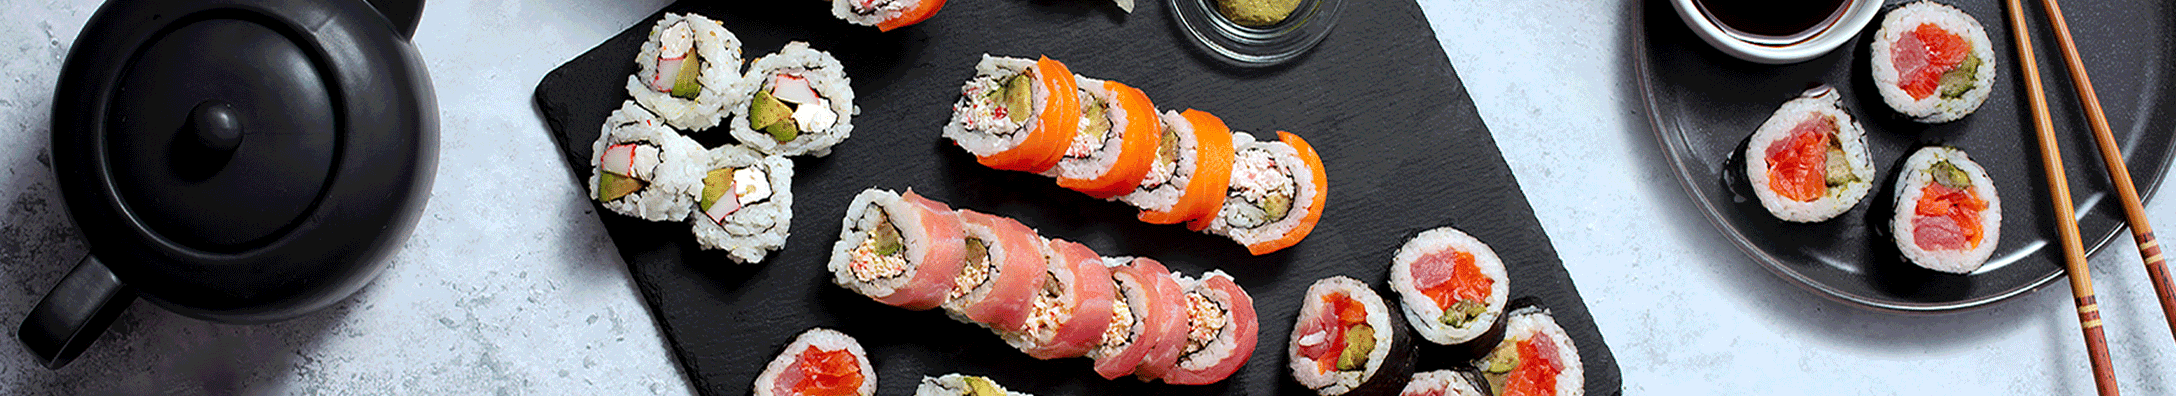 sushi on a serving platter